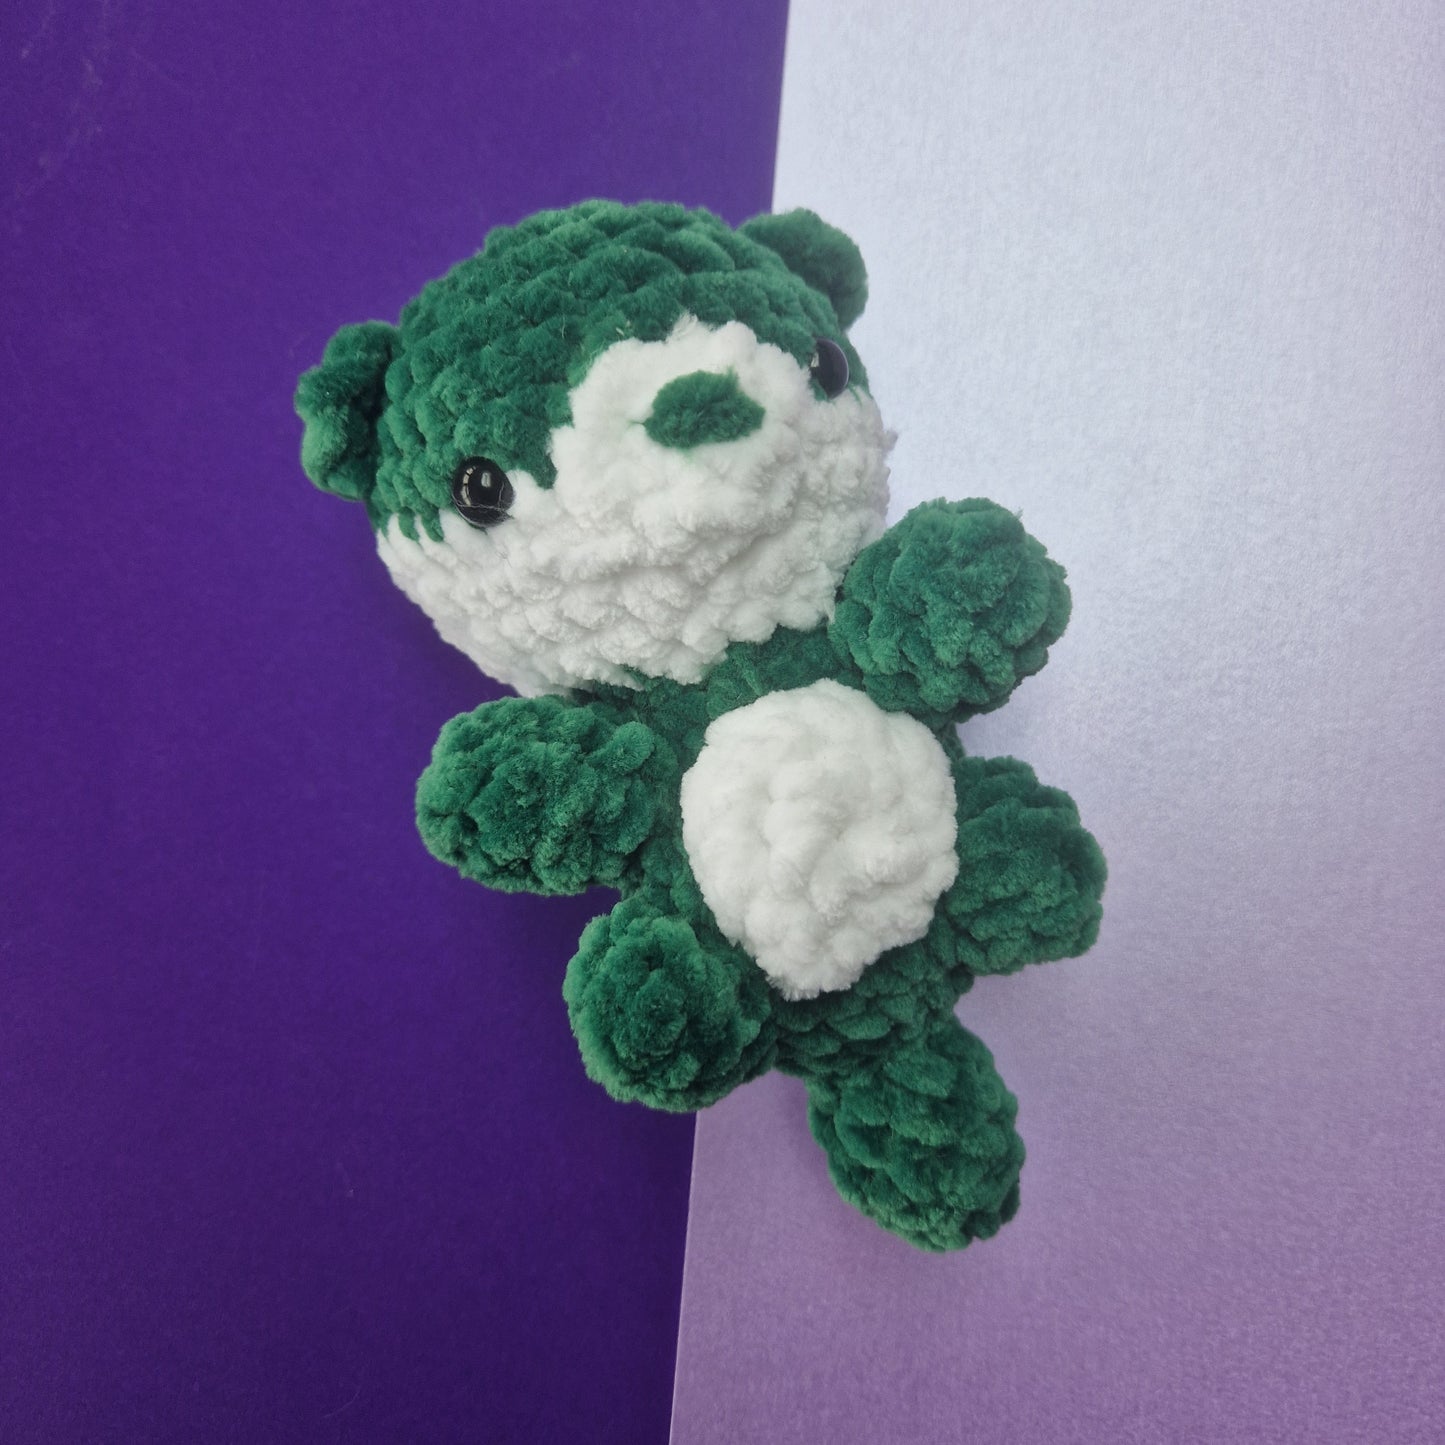 Crochet Chunky, super soft green and white sitting otter